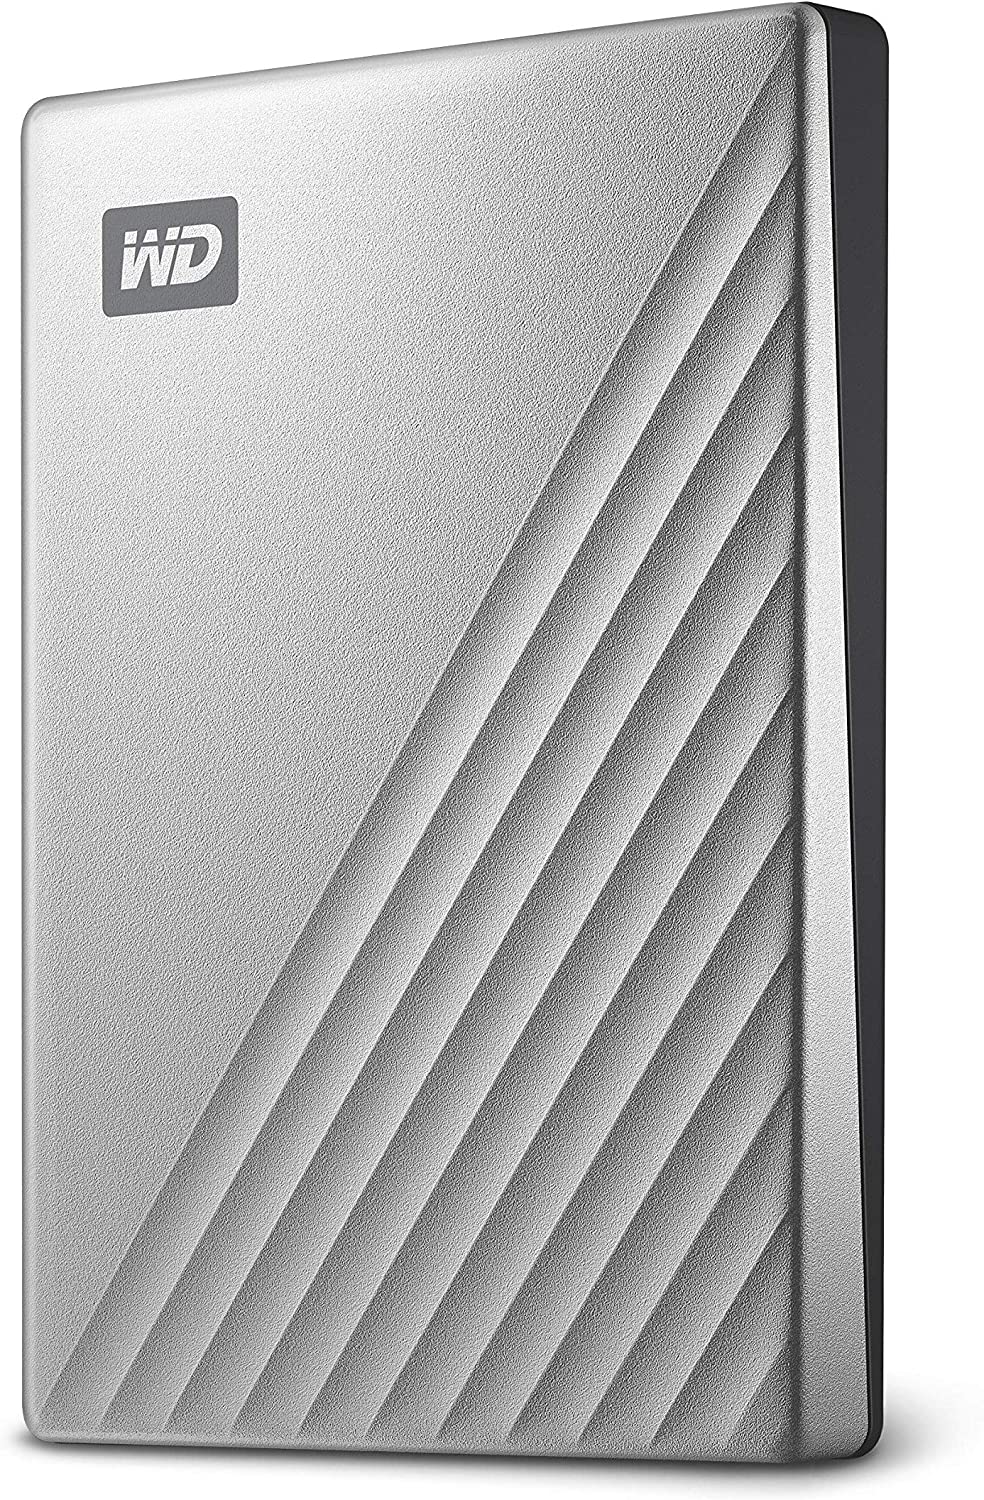 The Western Digital hard drive